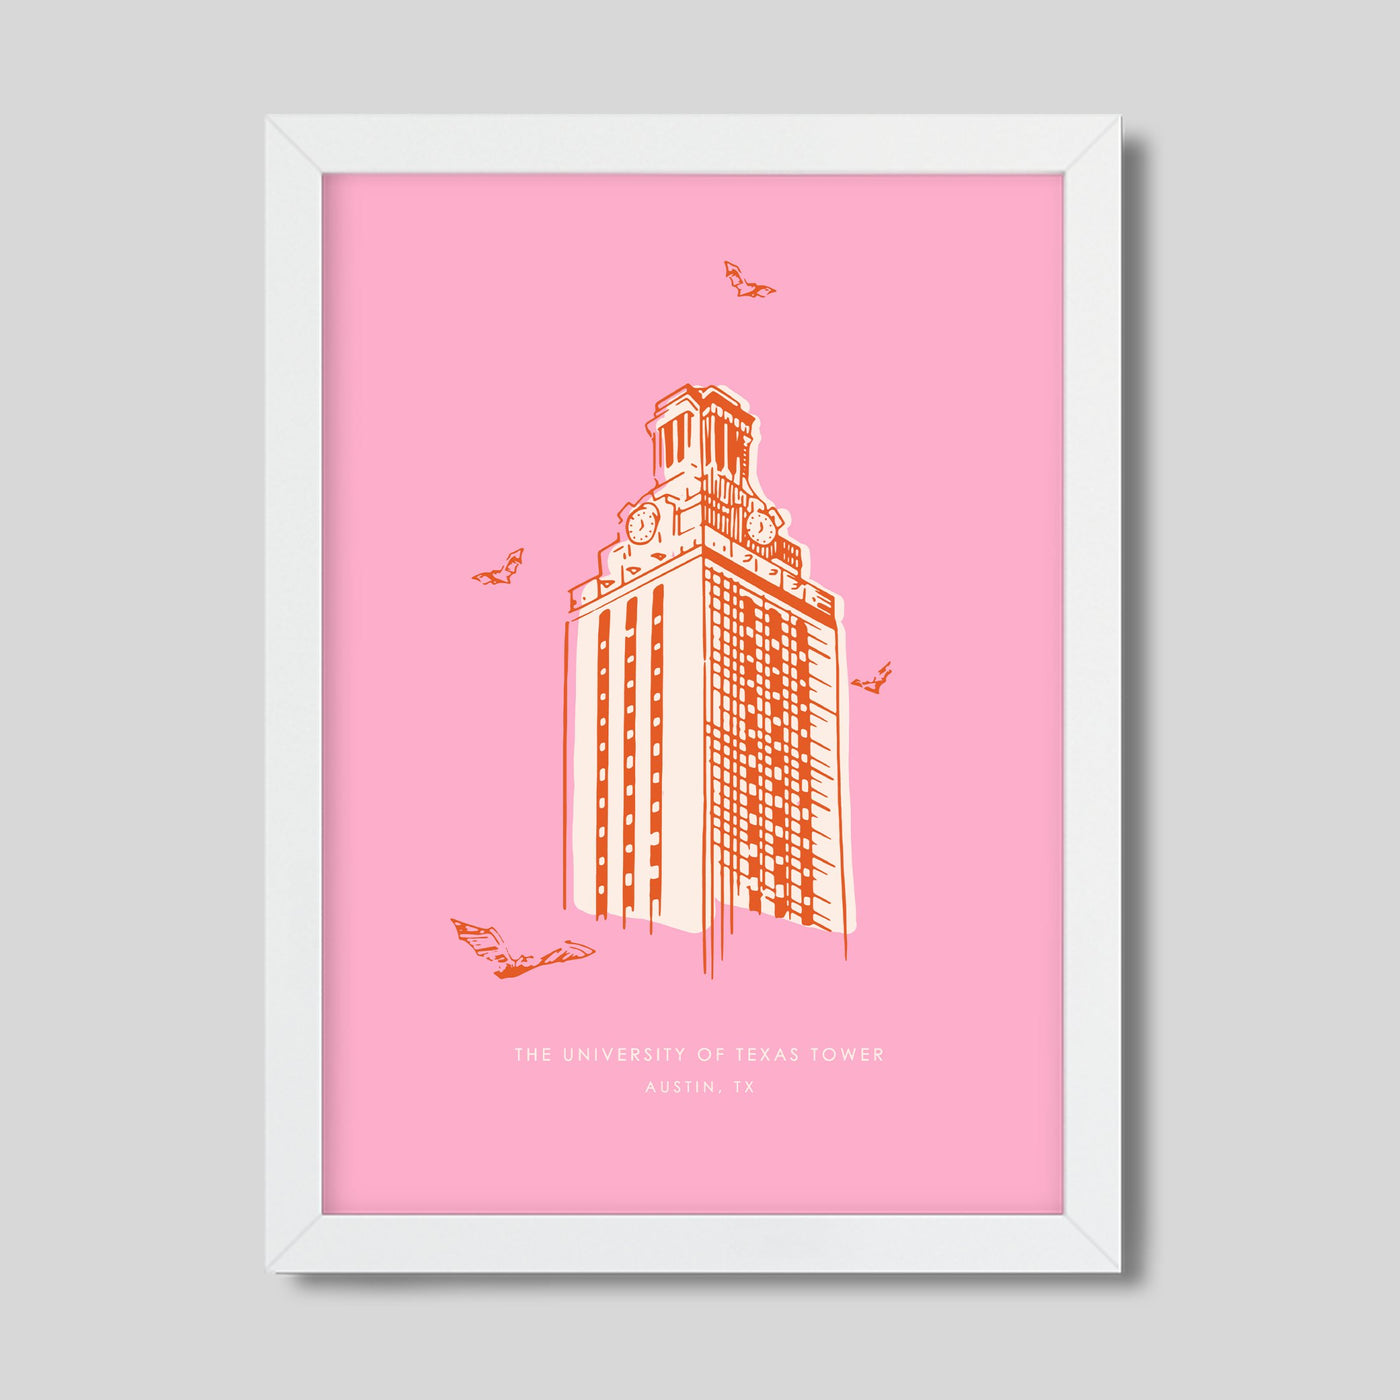 Gallery Prints Pink Print / 8x10 / White Frame Austin Tower Print Katie Kime